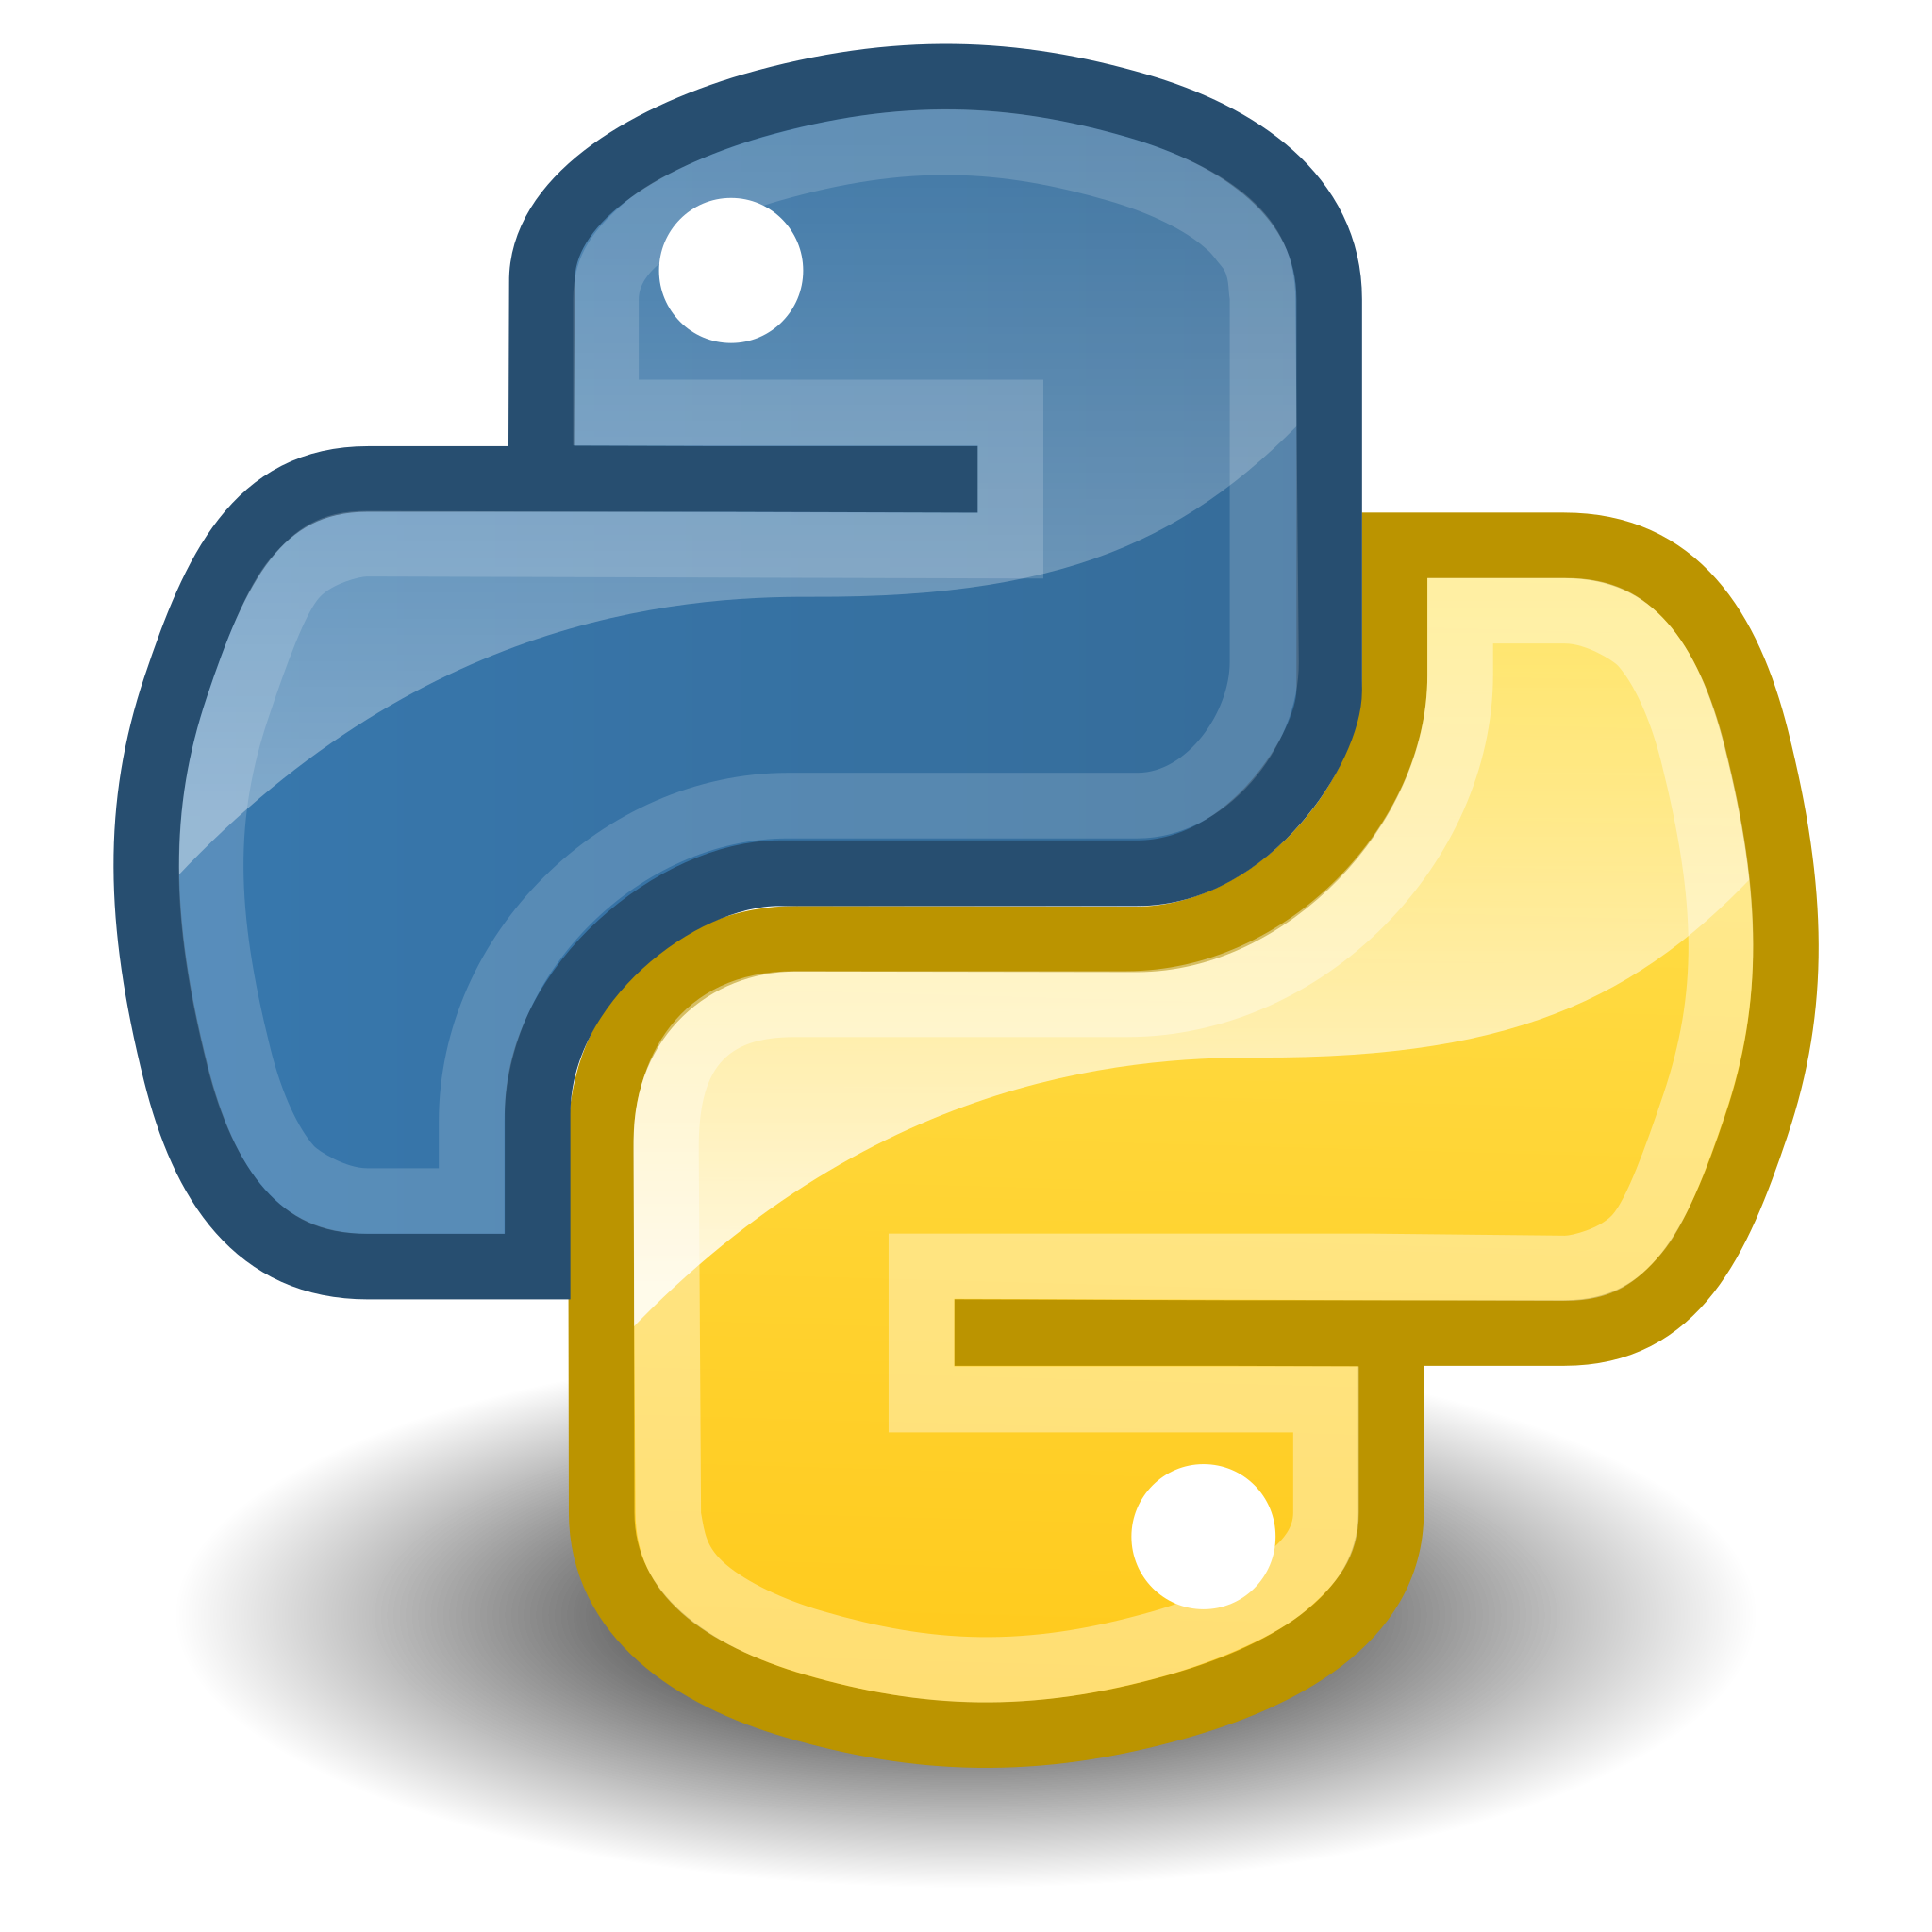 Python logo or Python coding script